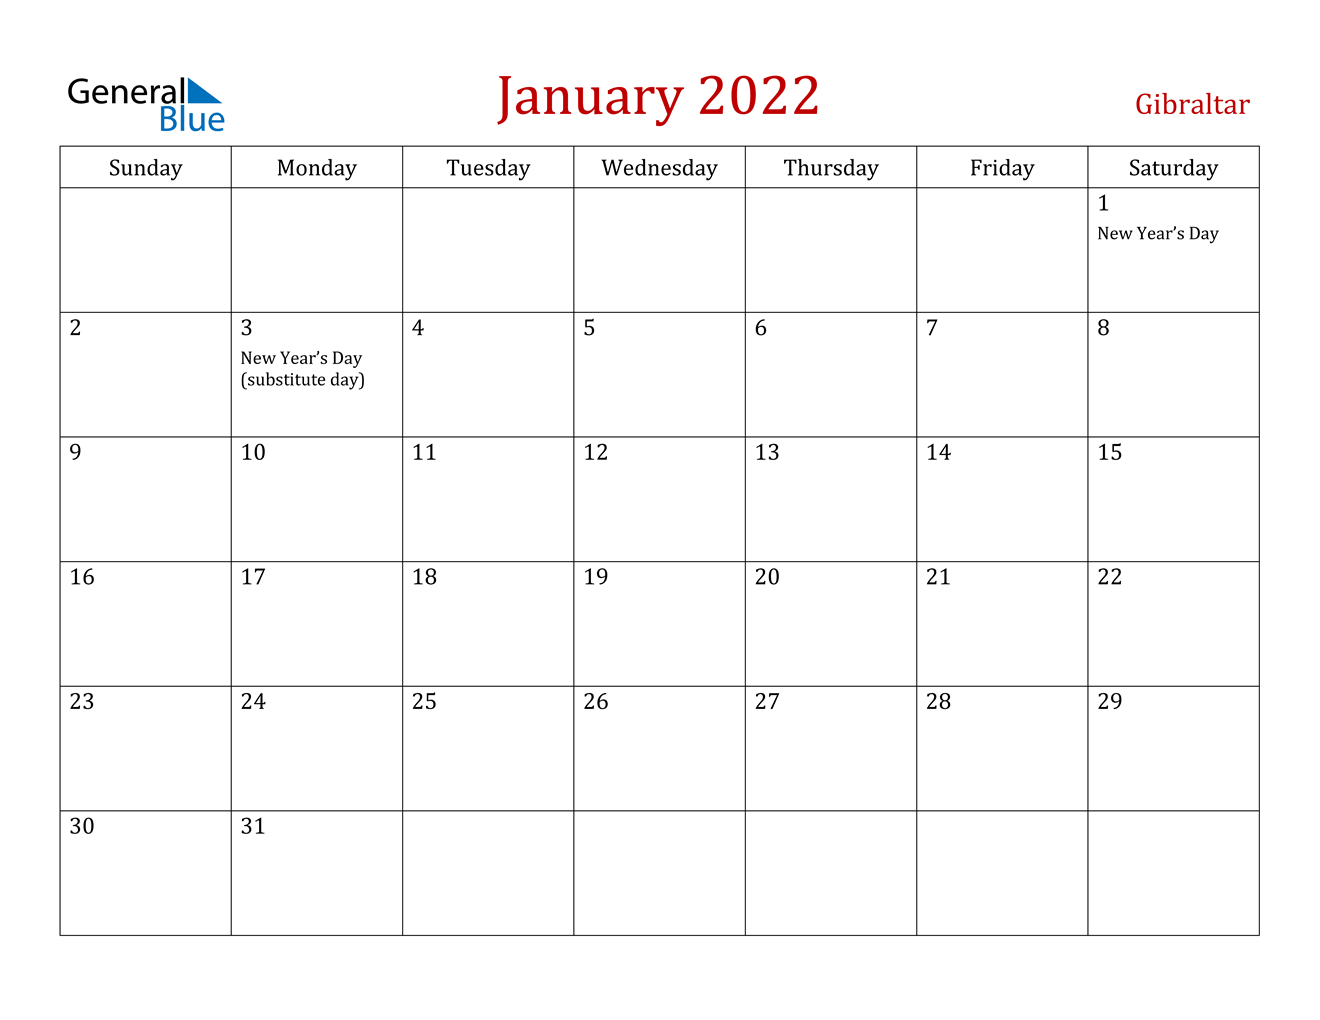 January 2022 Calendar - Gibraltar